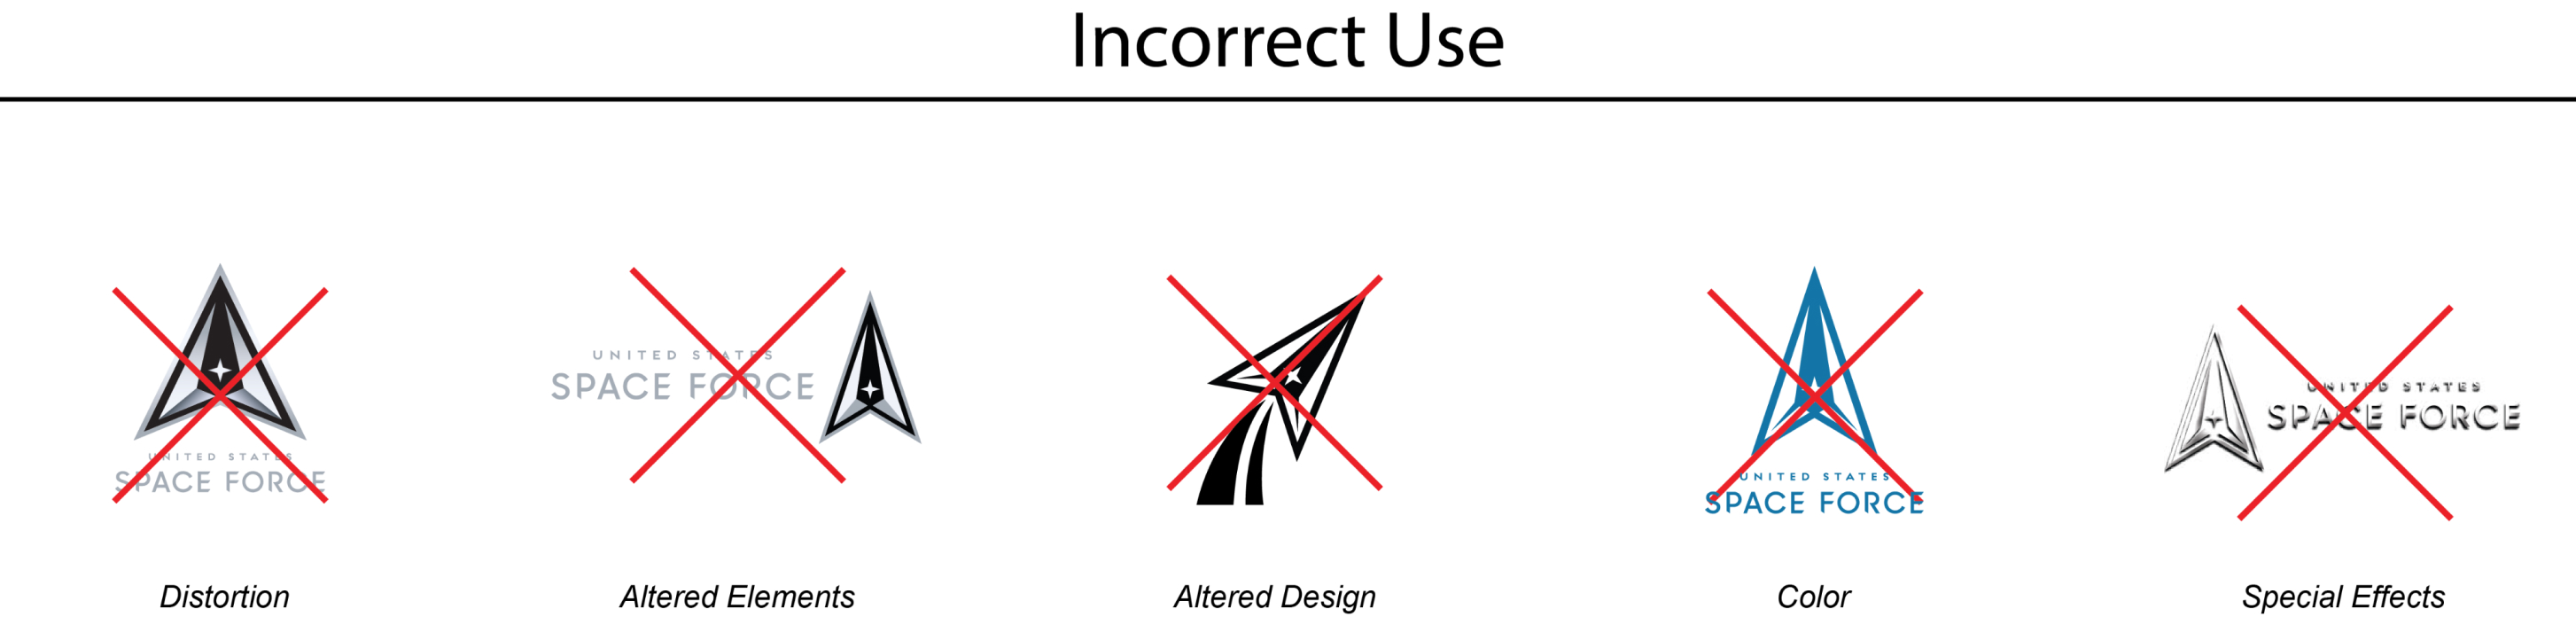 Image demonstrating incorrect use of logos